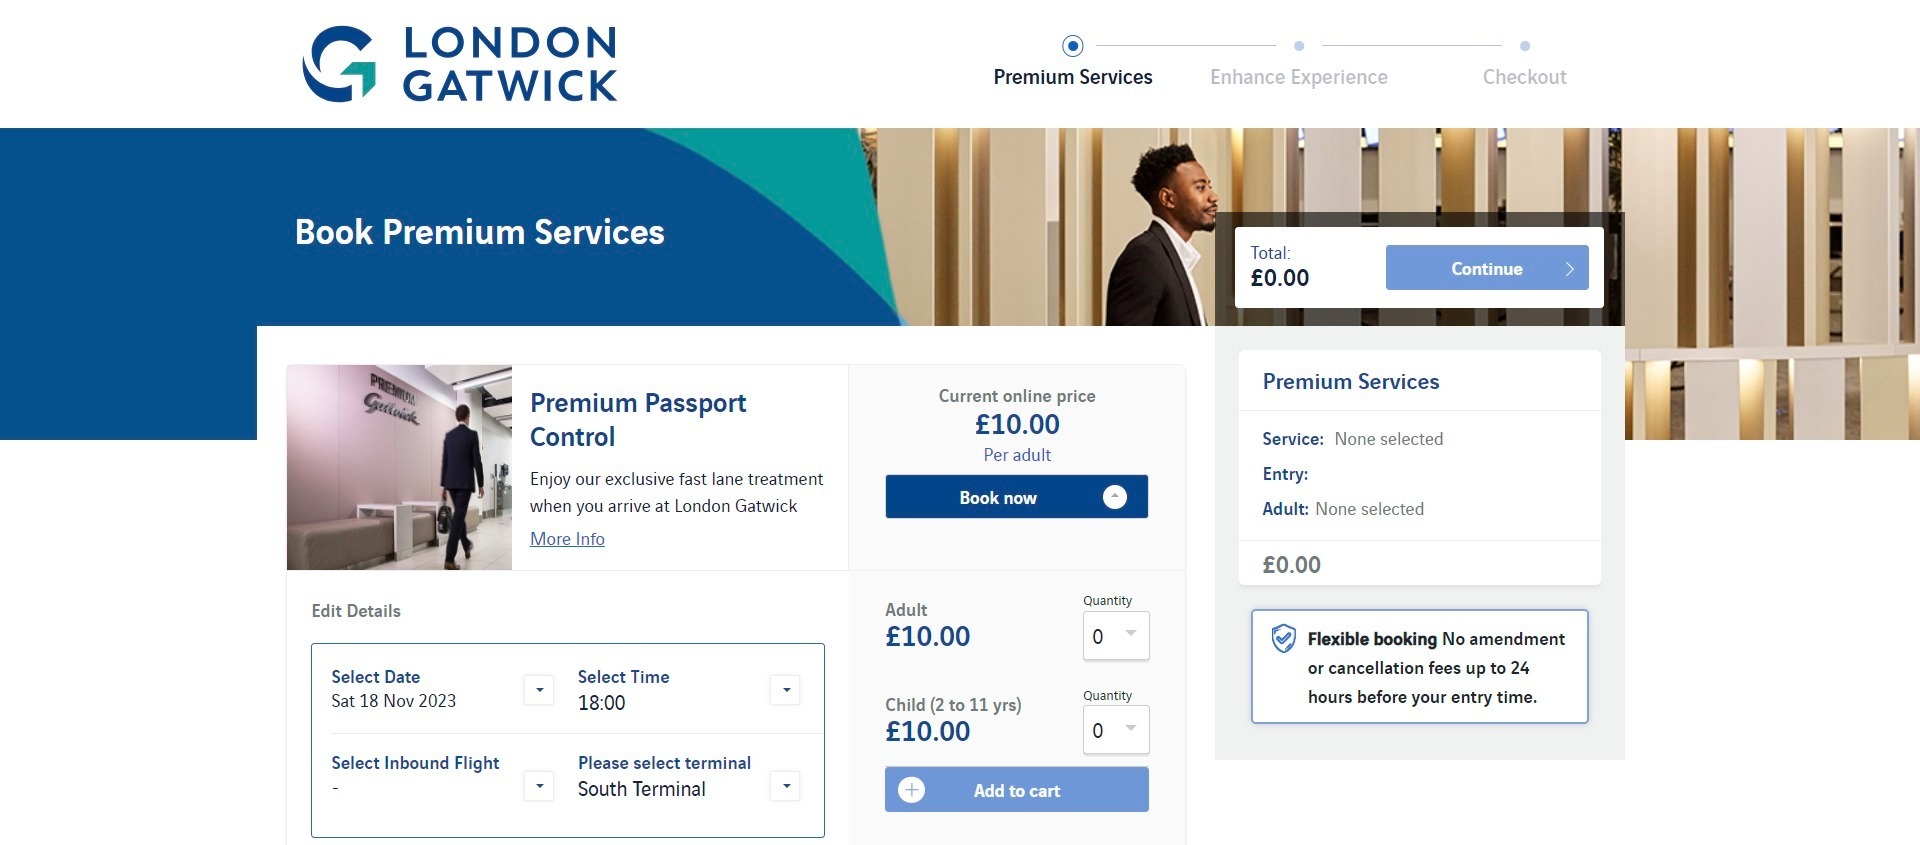 Gatwick Premium Passport Control - London Gatwick